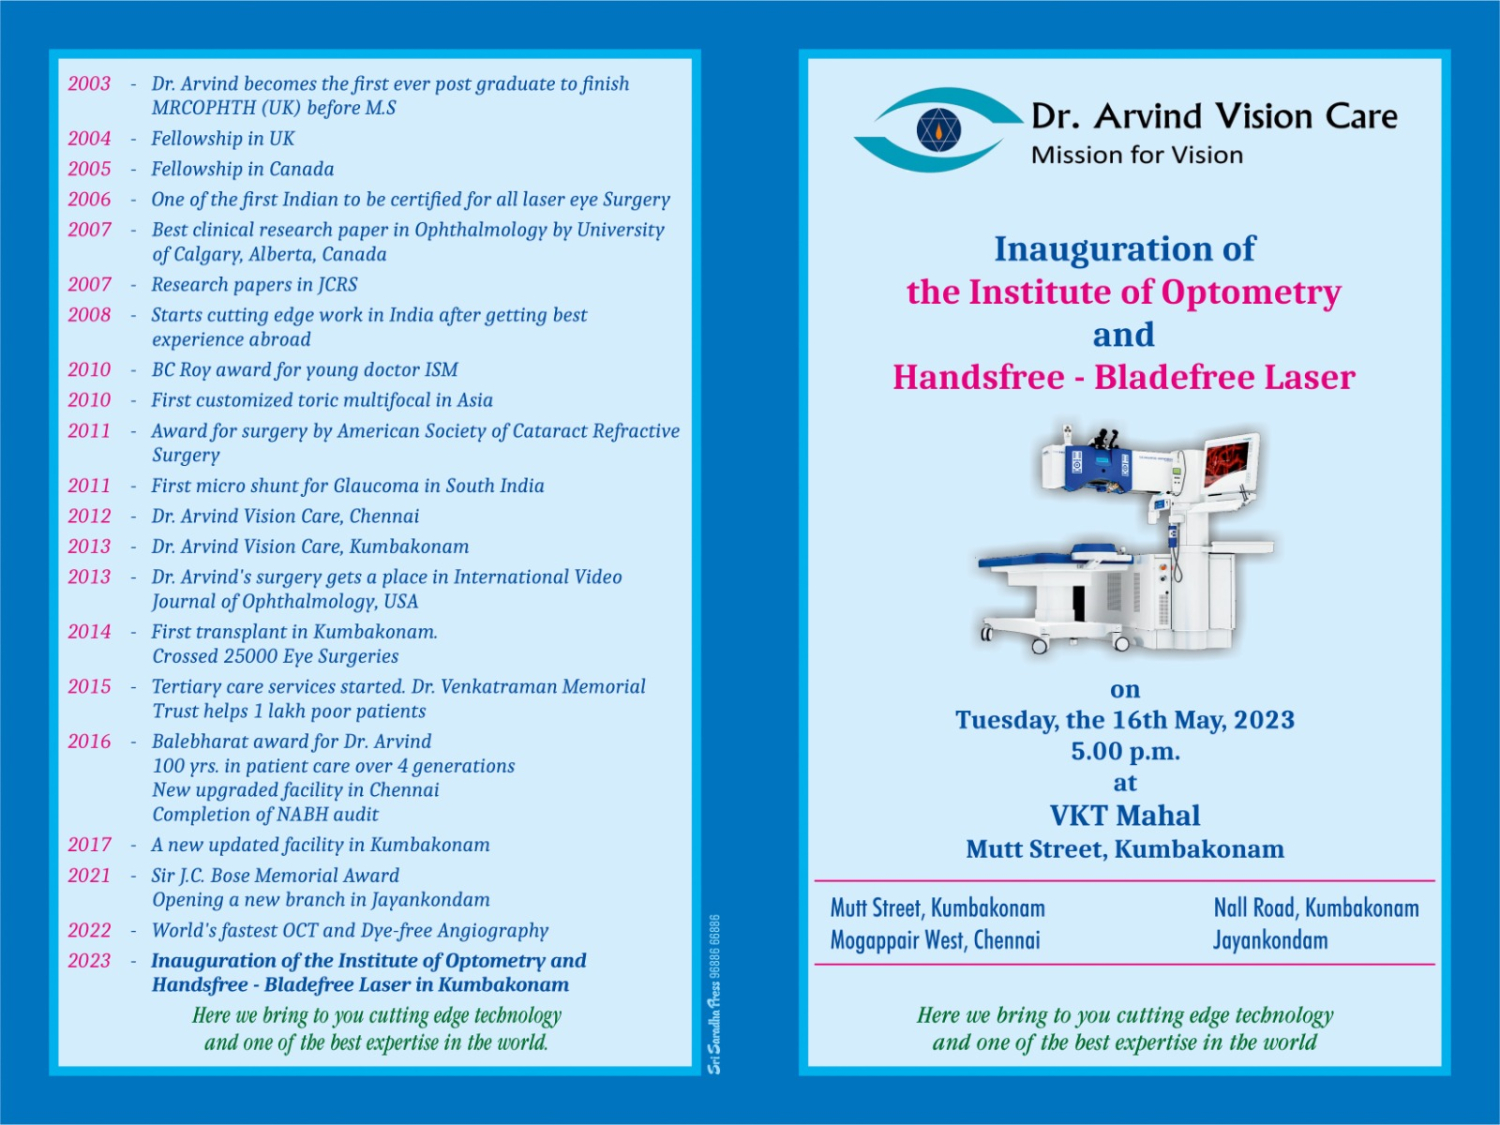 Inauguration of Institute of Optometry 1